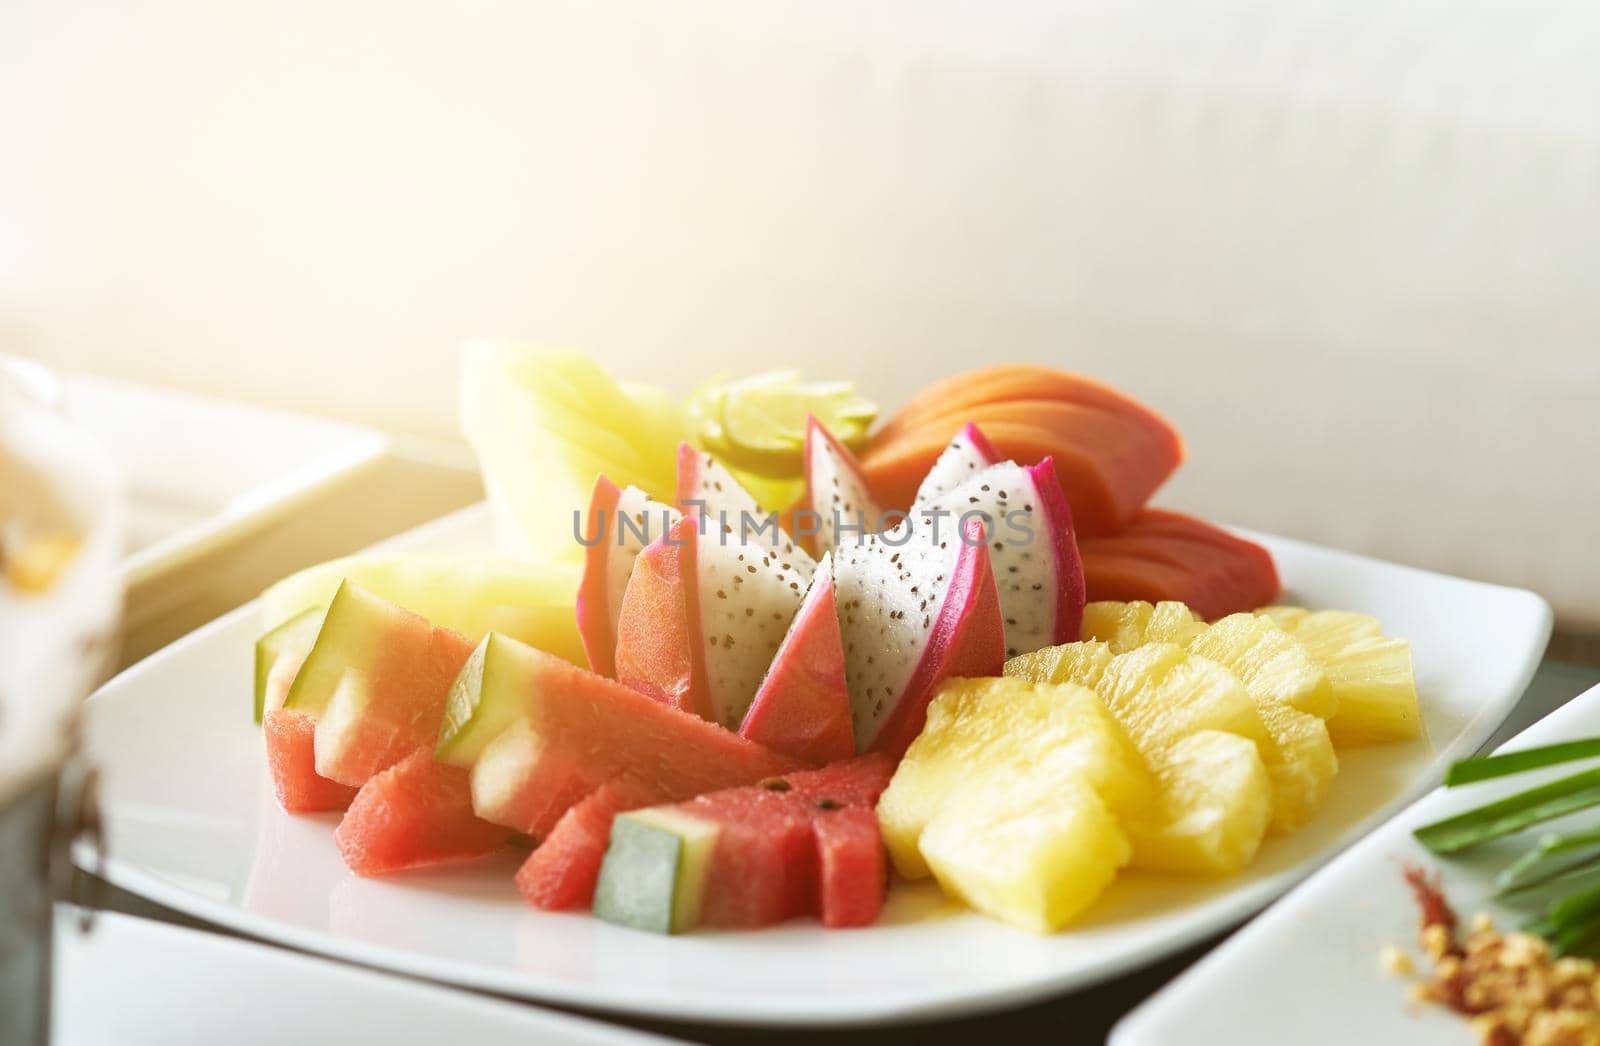 dragon fruit,pine apple,melon,water melon,papaya slice in plate for snack dessert